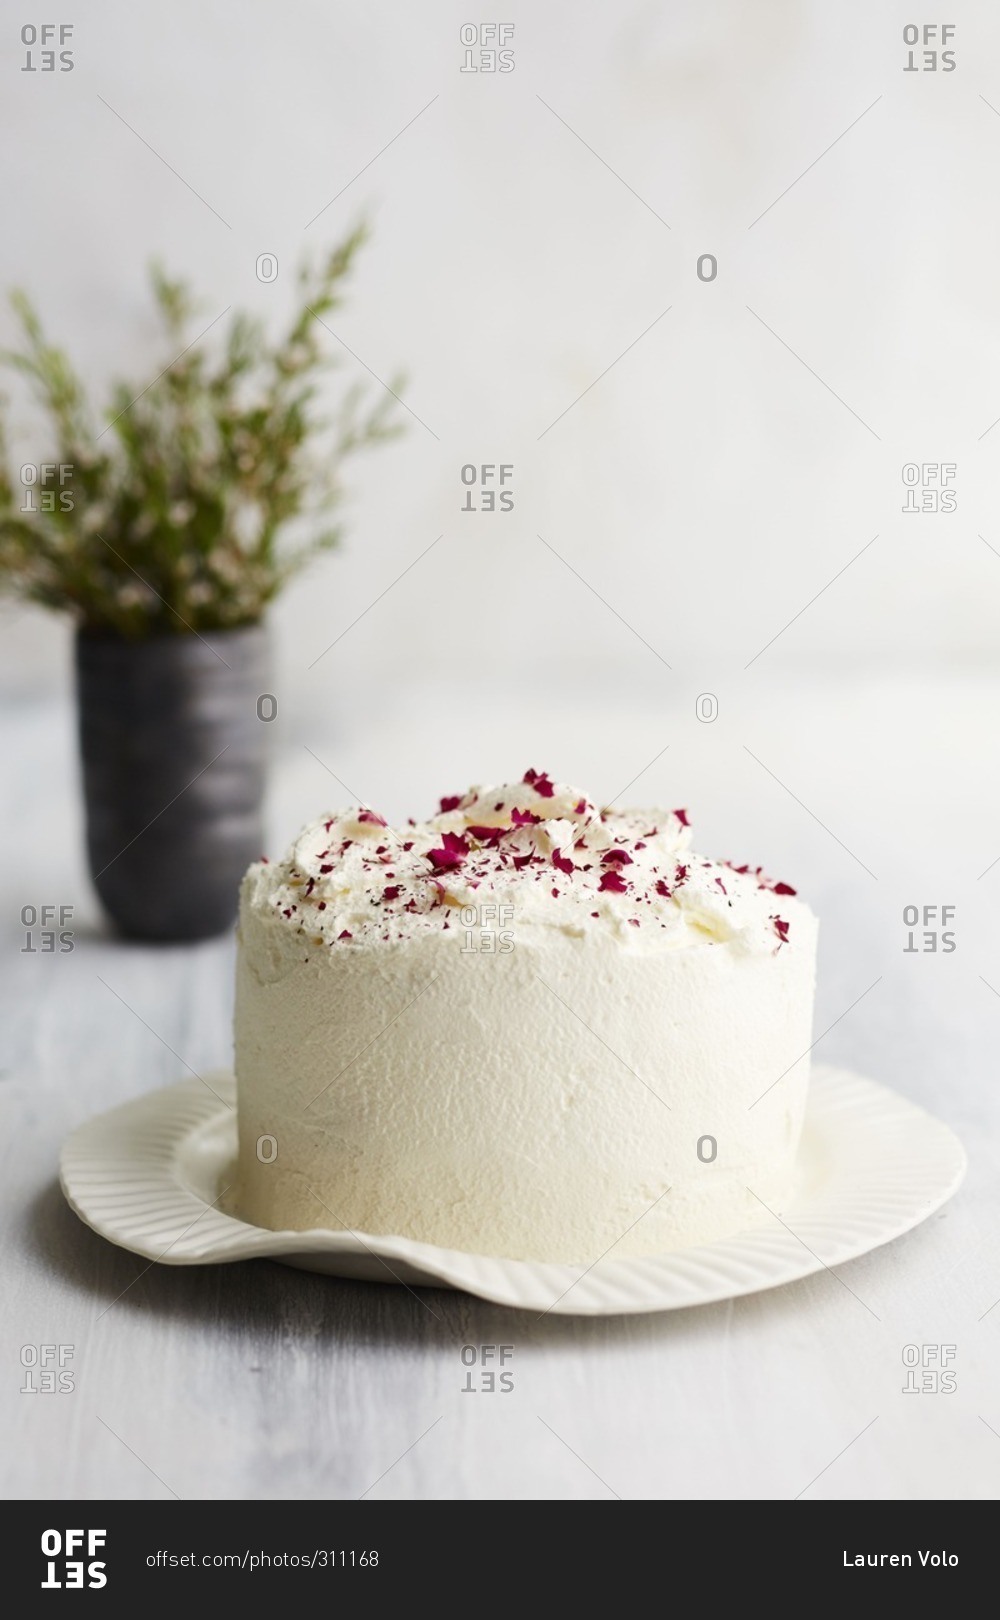 Rhubarb and rose petal white cake